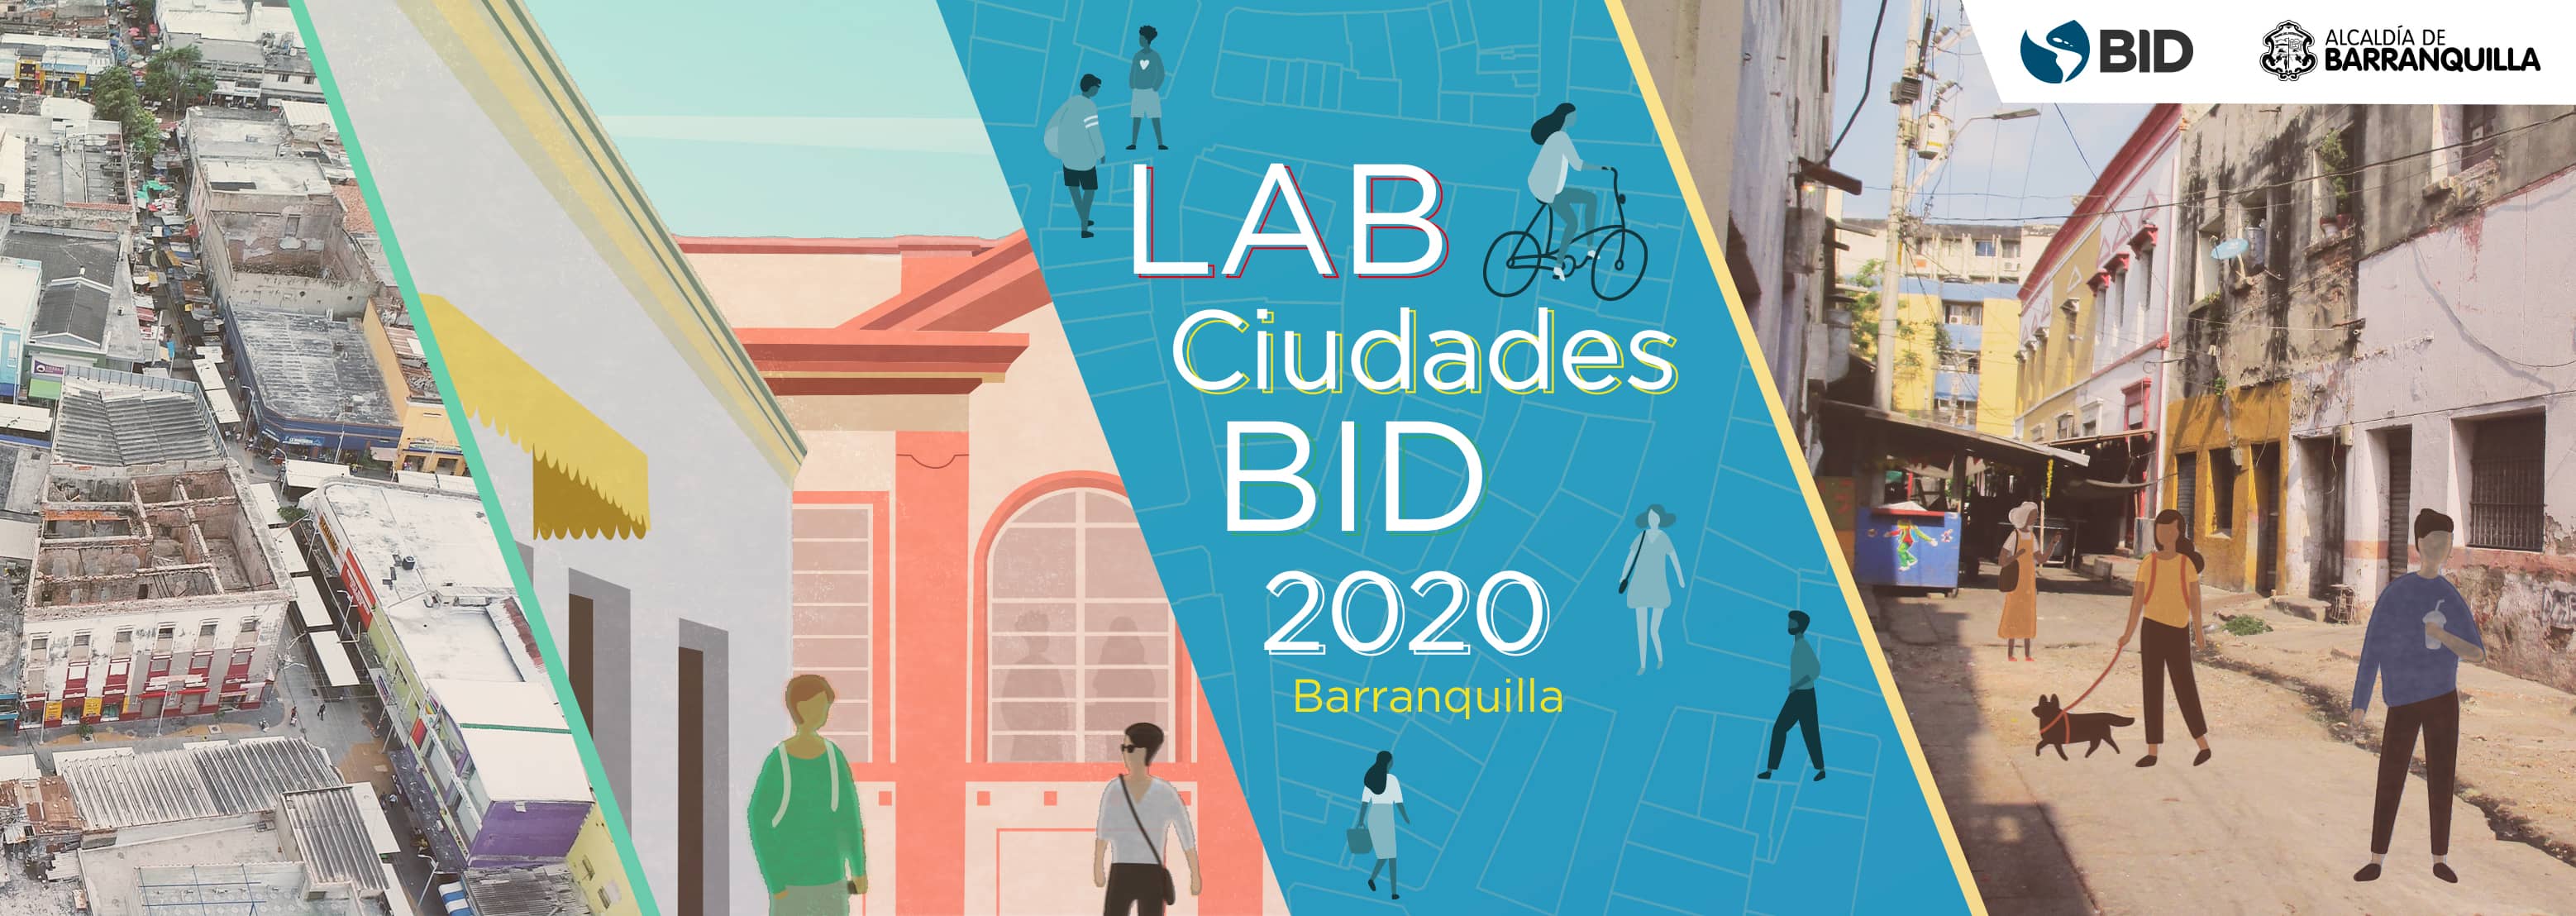 Banner LAB ciudades Barranquilla